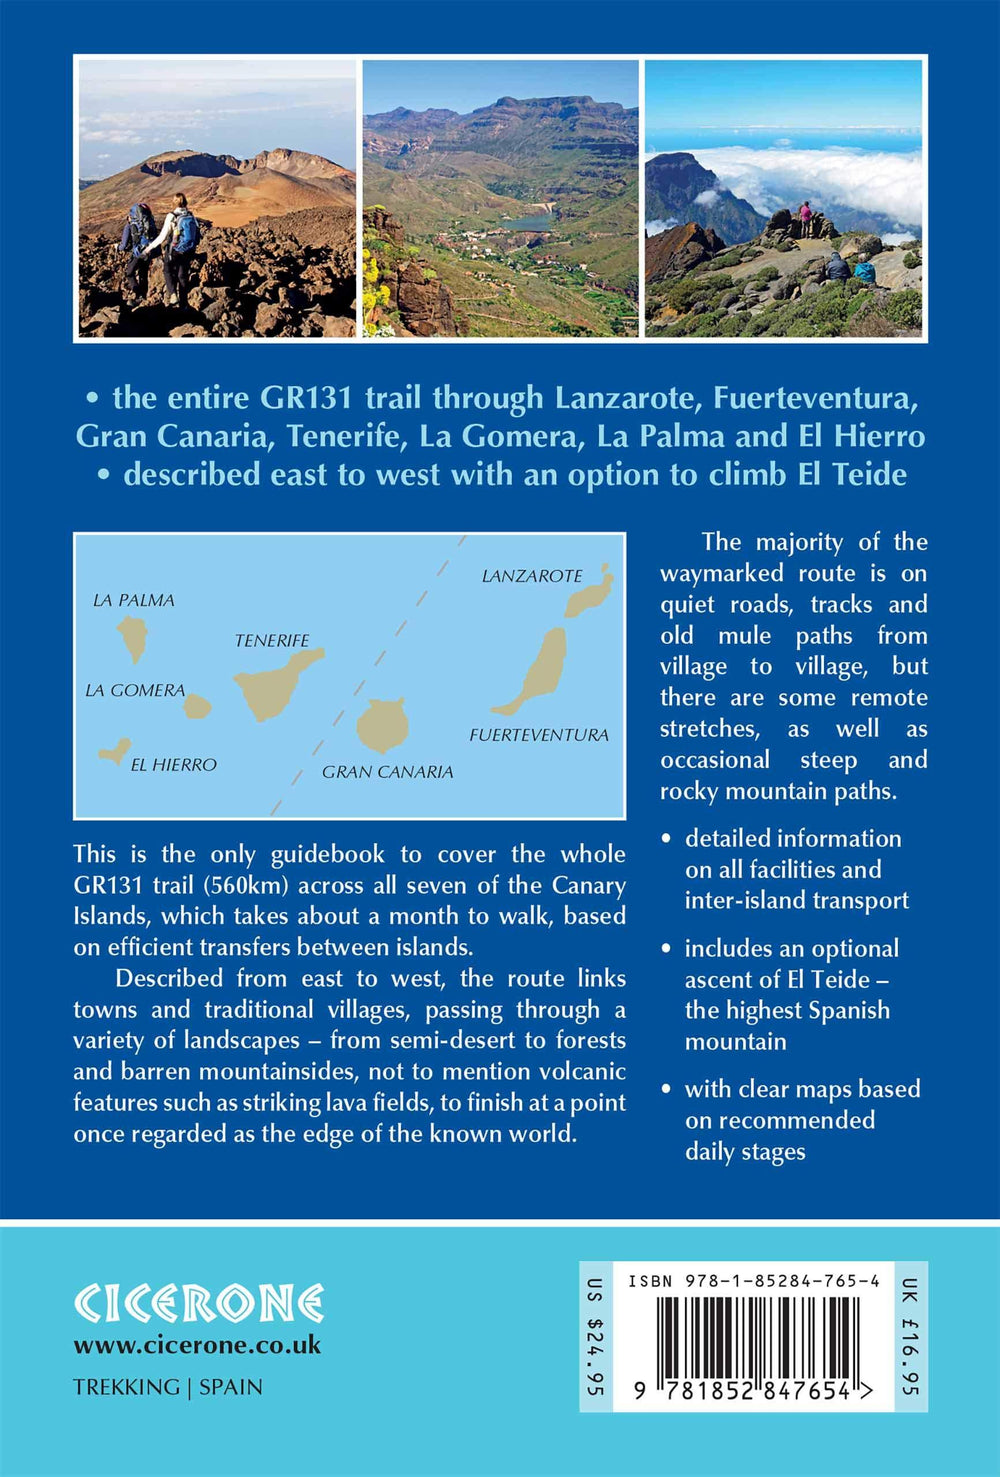 Guide de randonnées (en anglais) - Trekking in the Canary Islands: The GR131 island-hopping route | Cicerone guide de randonnée Cicerone 